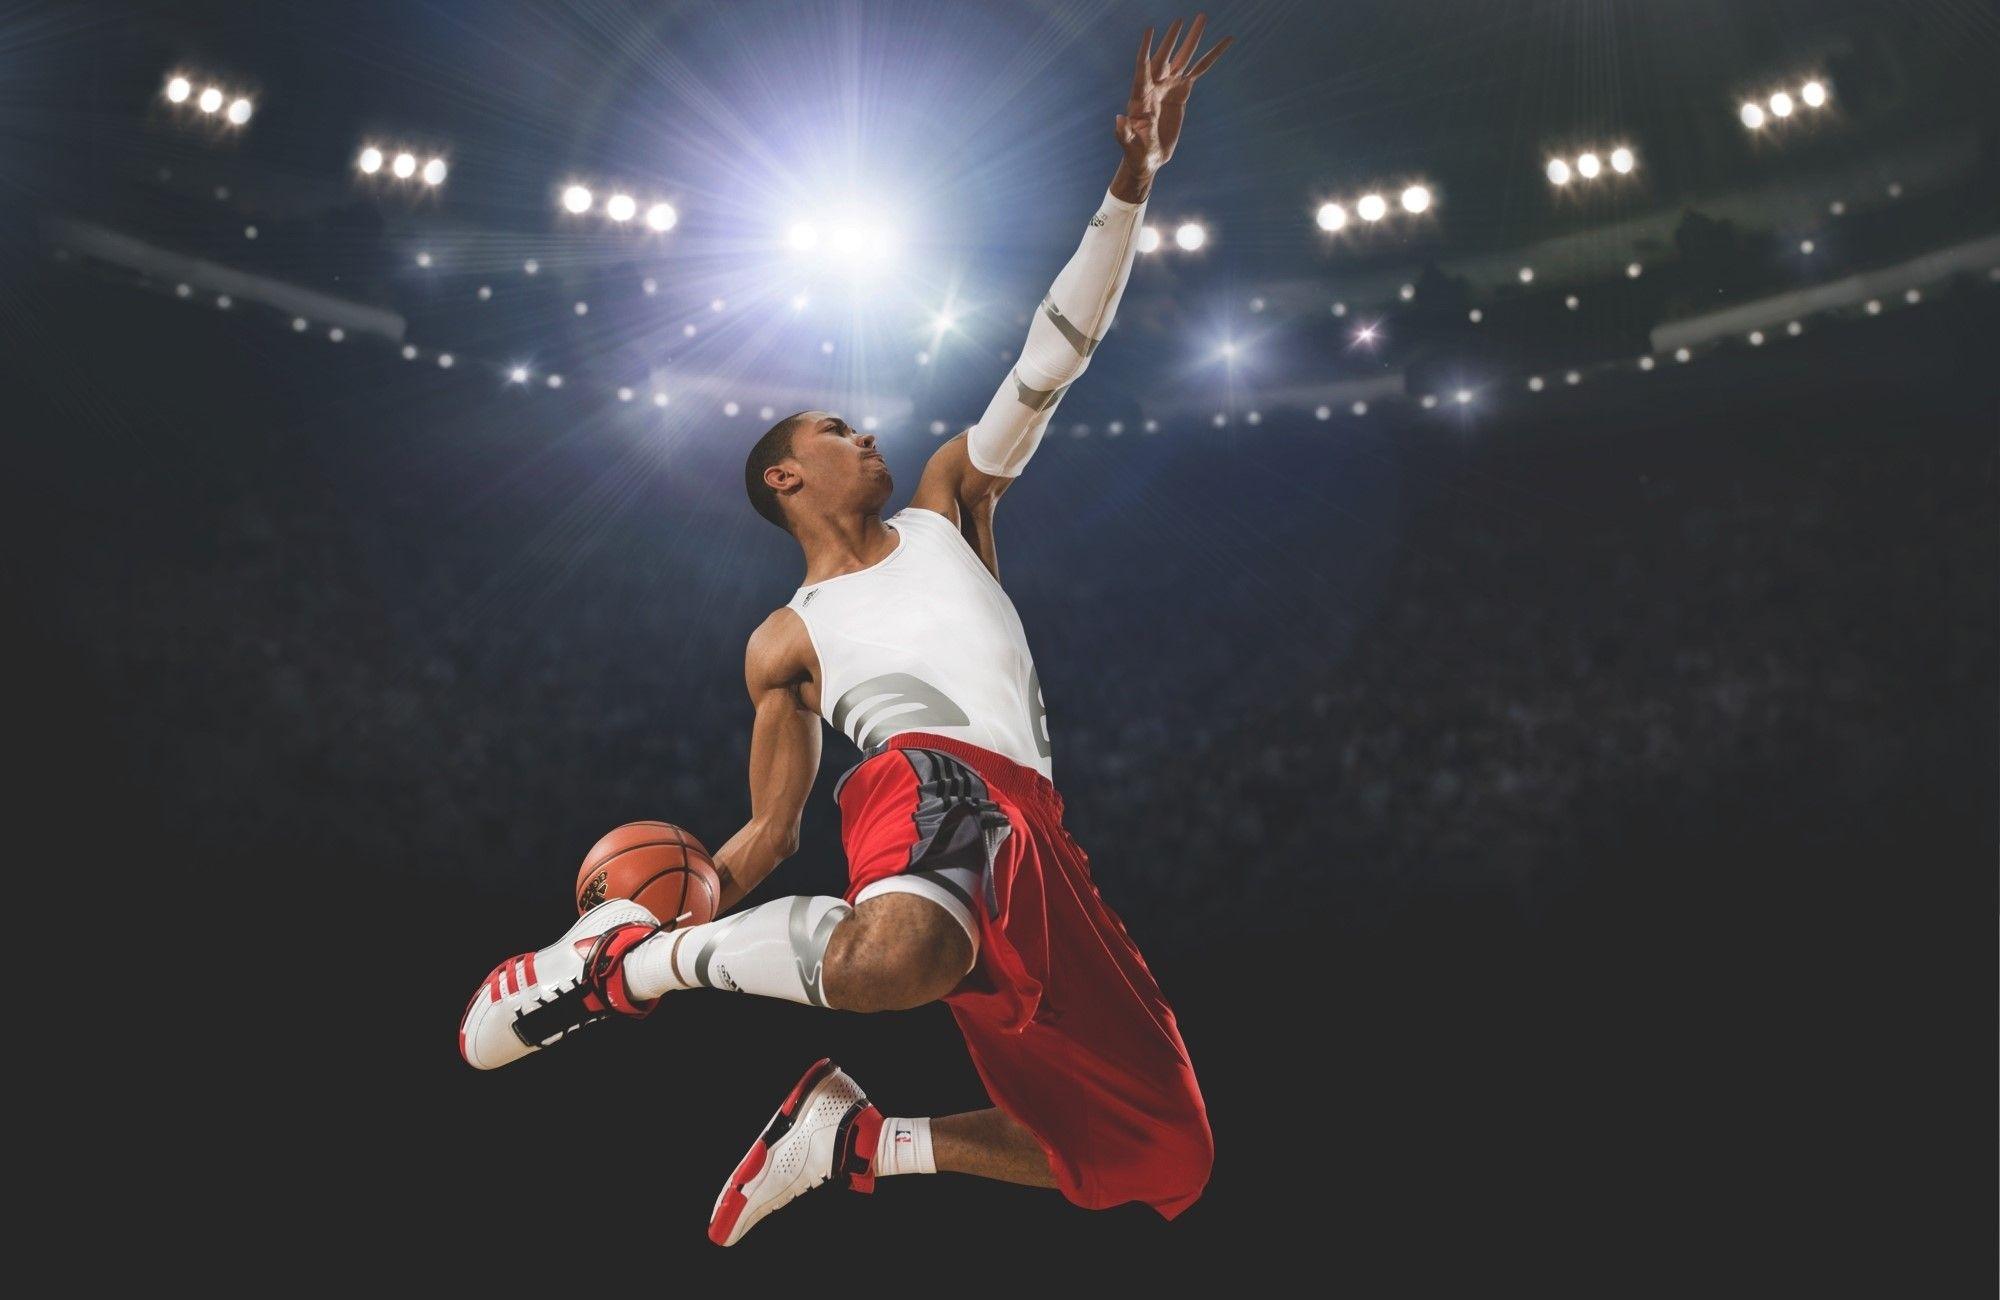 Derrick rose, Slam dunk, Basketball wallpaper and background